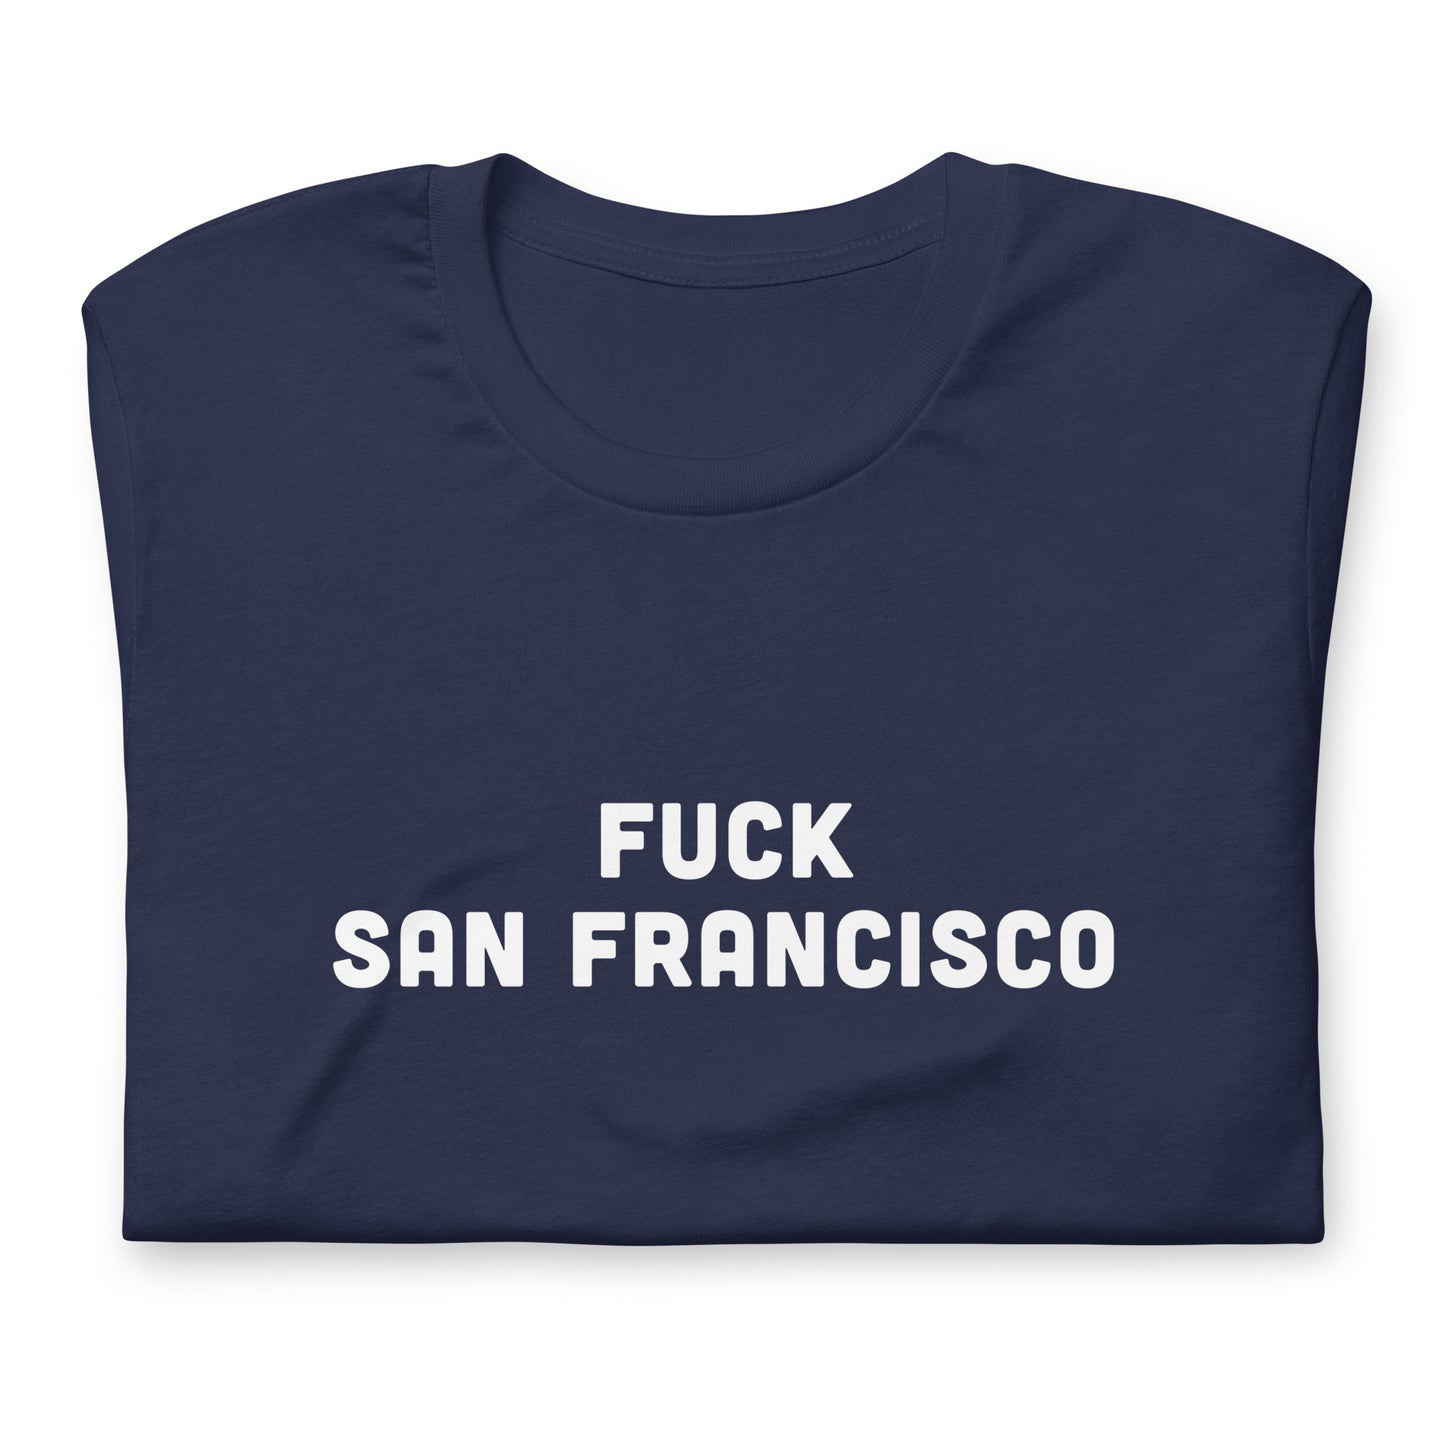 Fuck San Francisco T-Shirt Size L Color Black